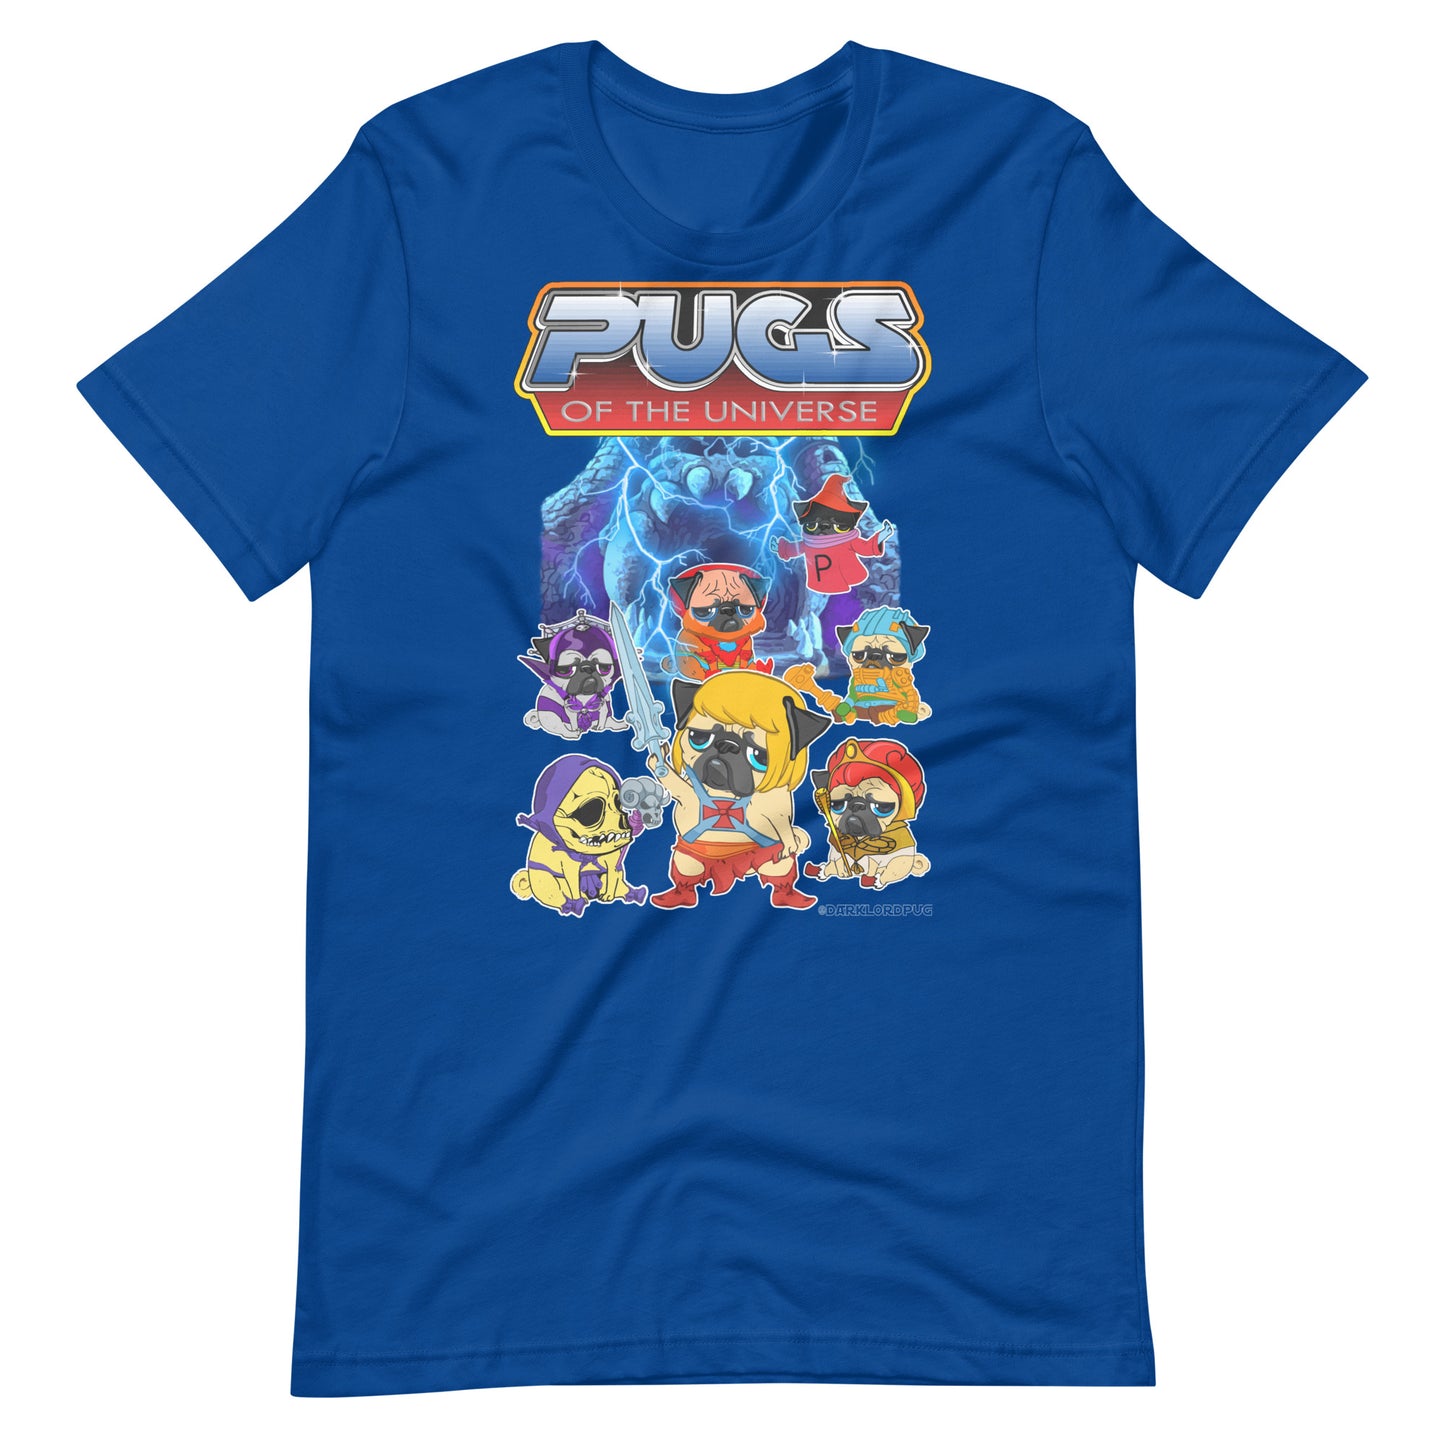 Pugs of the Universe Unisex T-Shirt